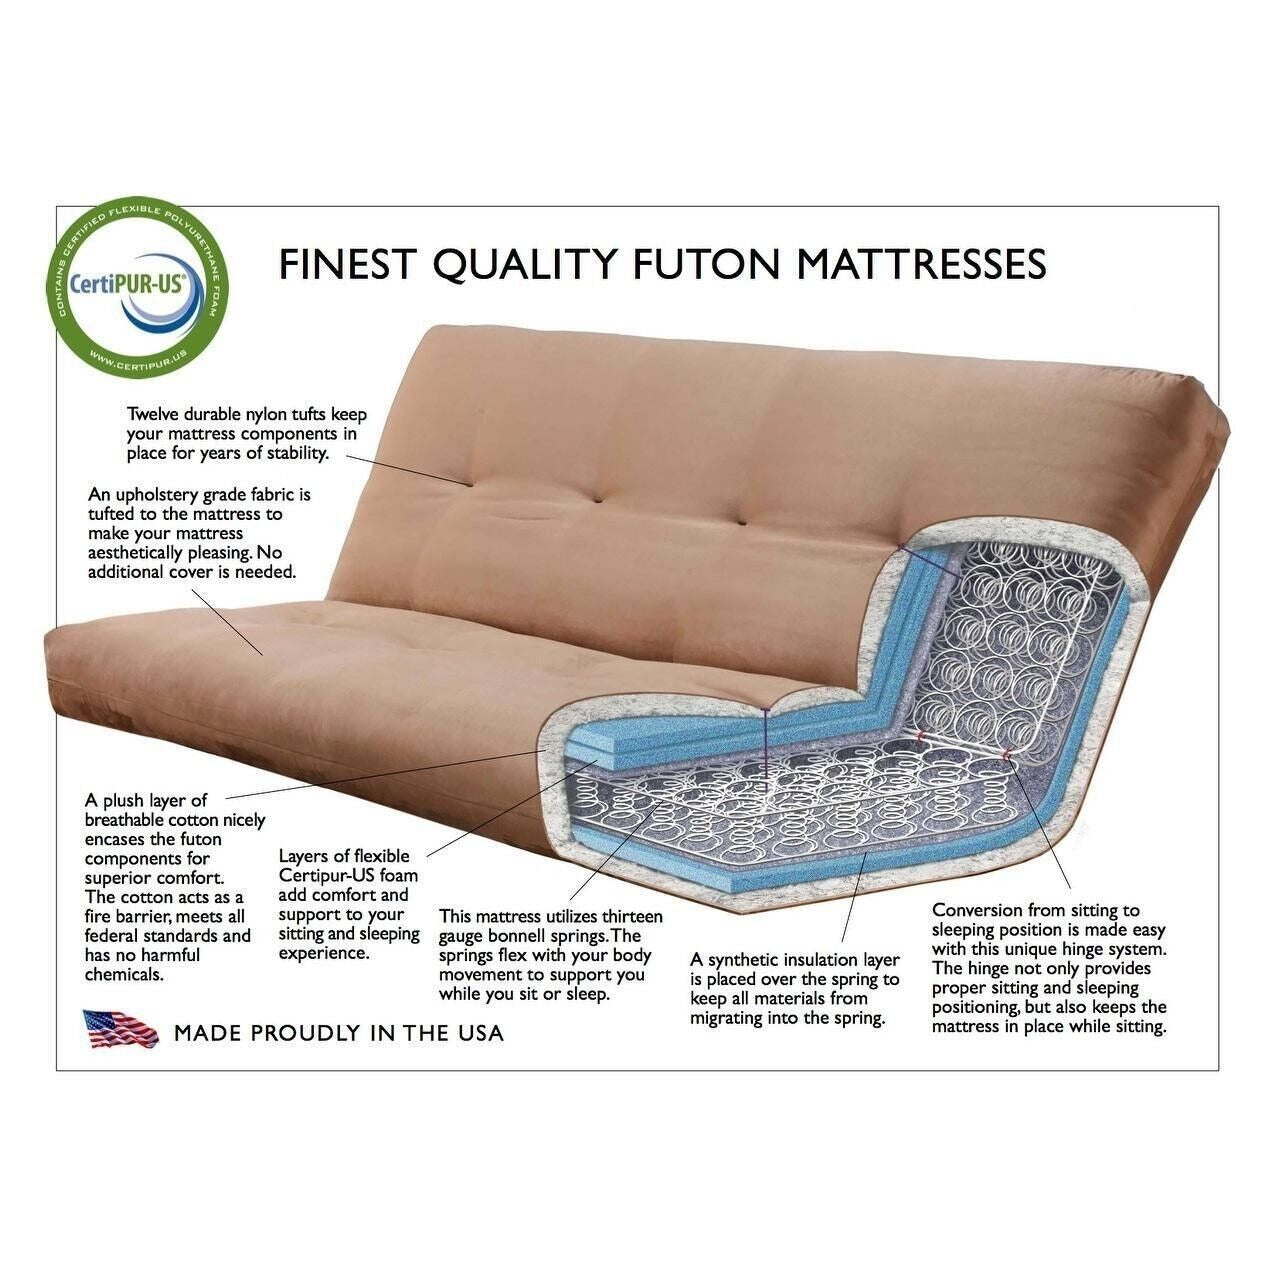 Futon Bed Set - Full Sz Solid Wood Futon w/Cotton Mattress & Storage - Safari